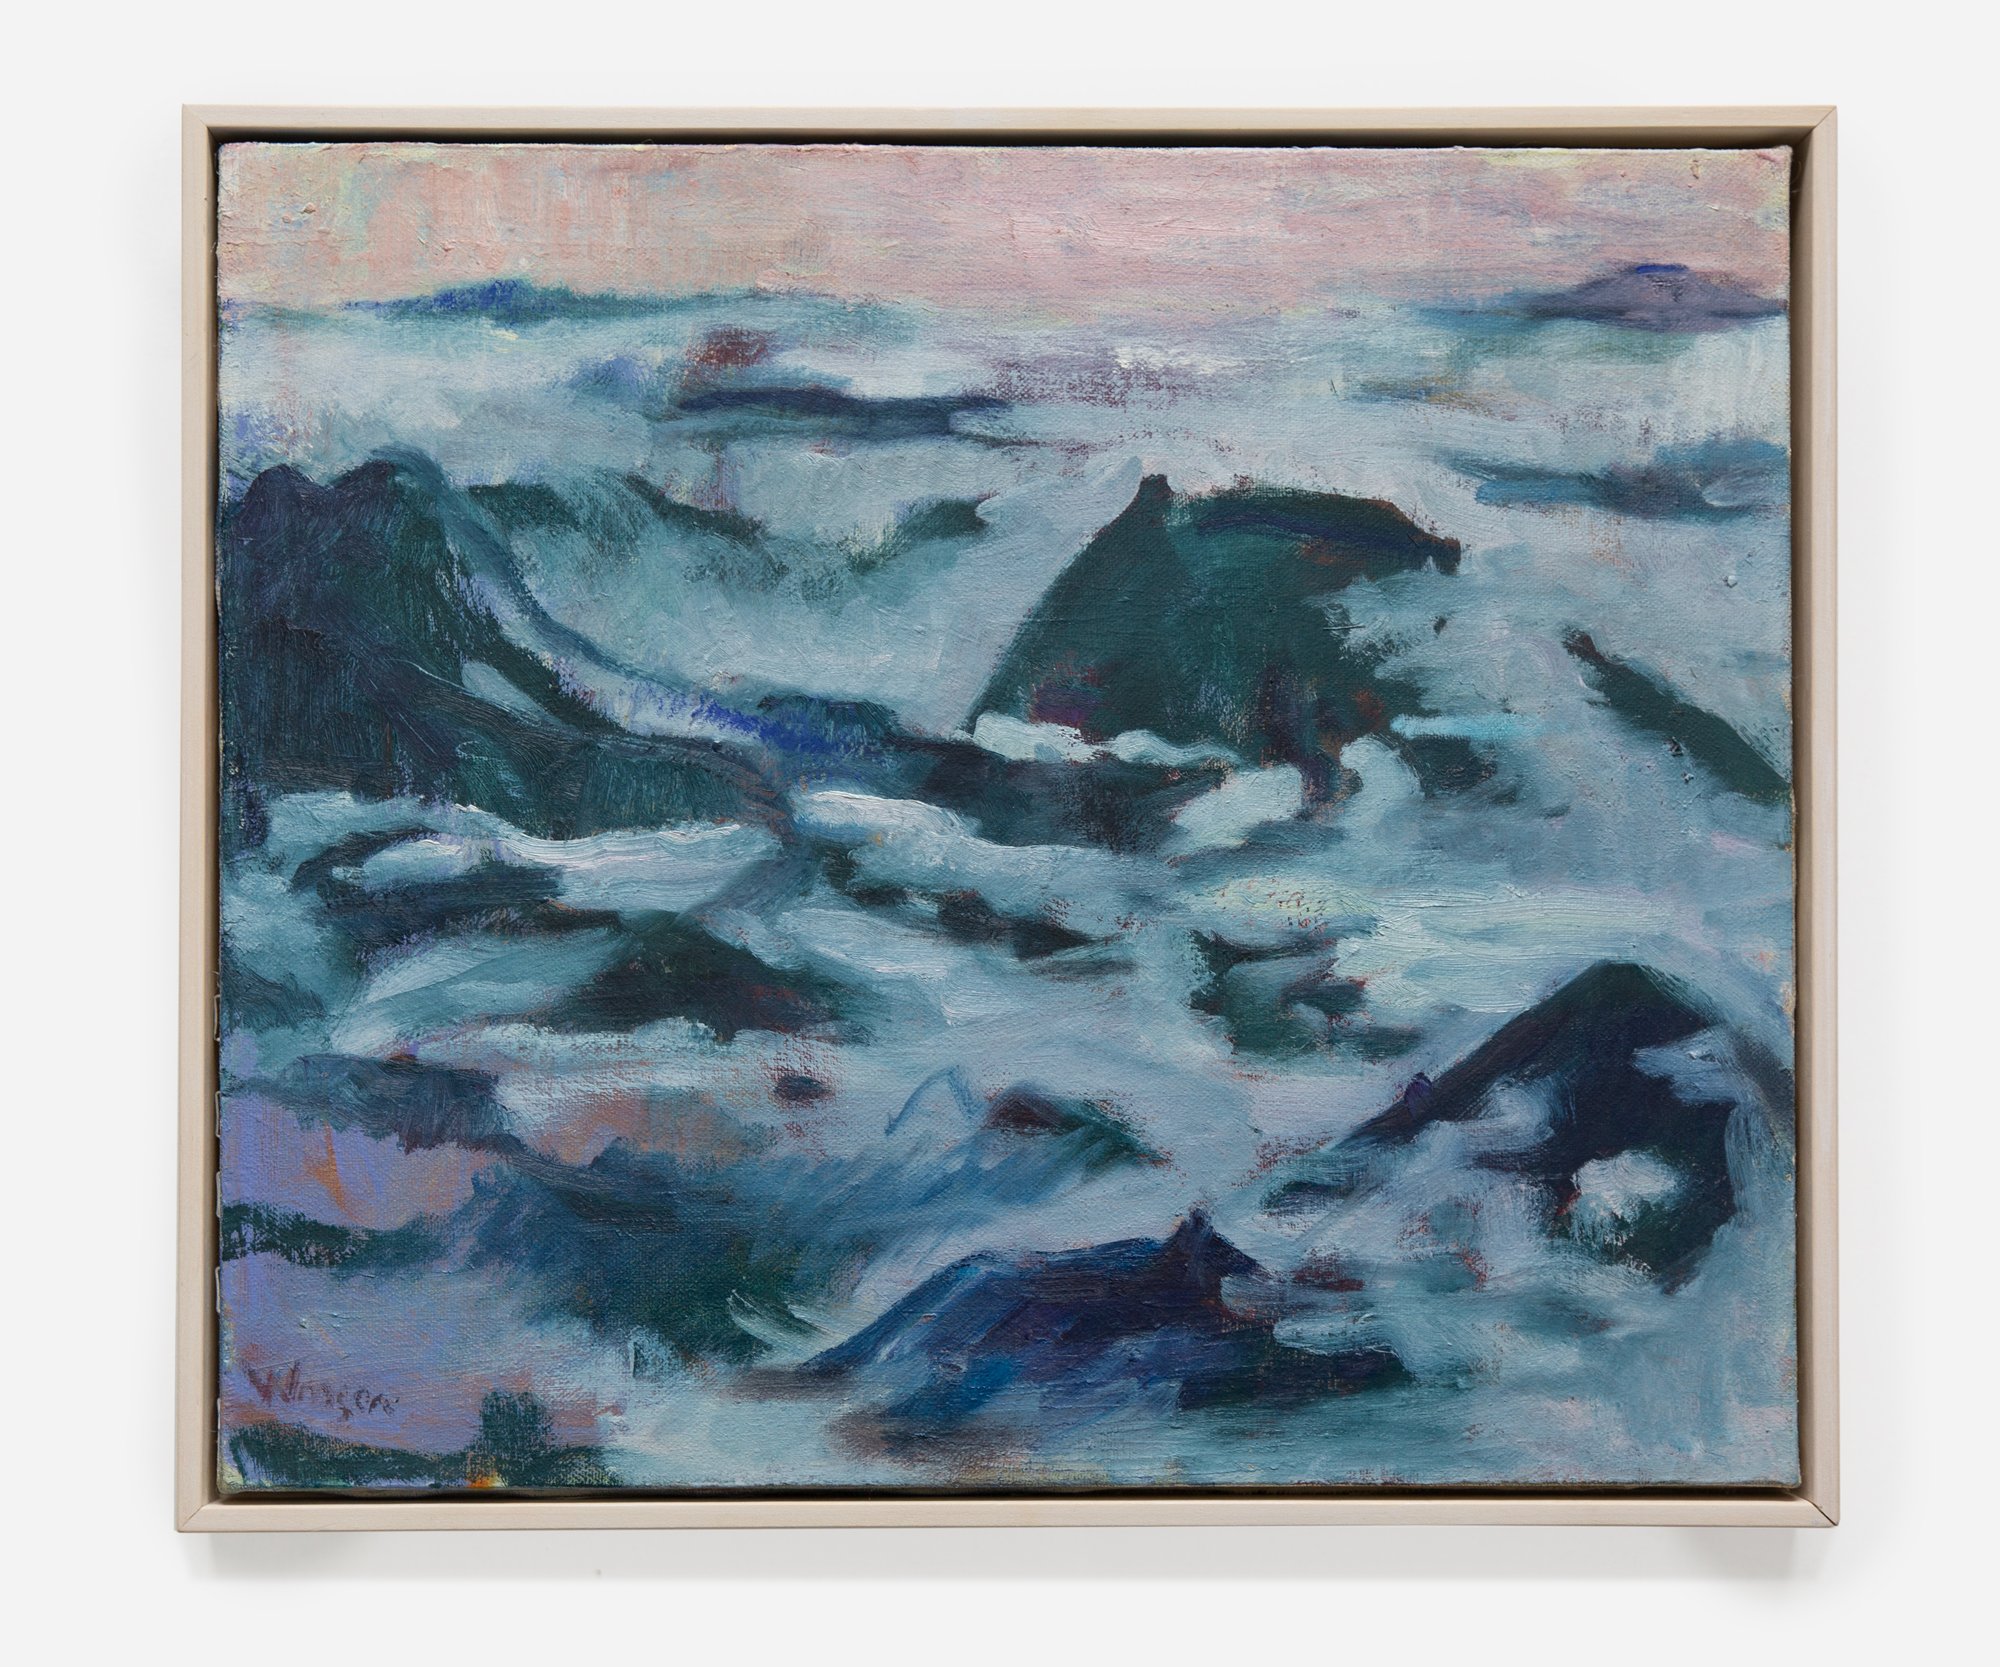     Twelve misty mountains , 2016, oil on canvas, 13 x 15”       